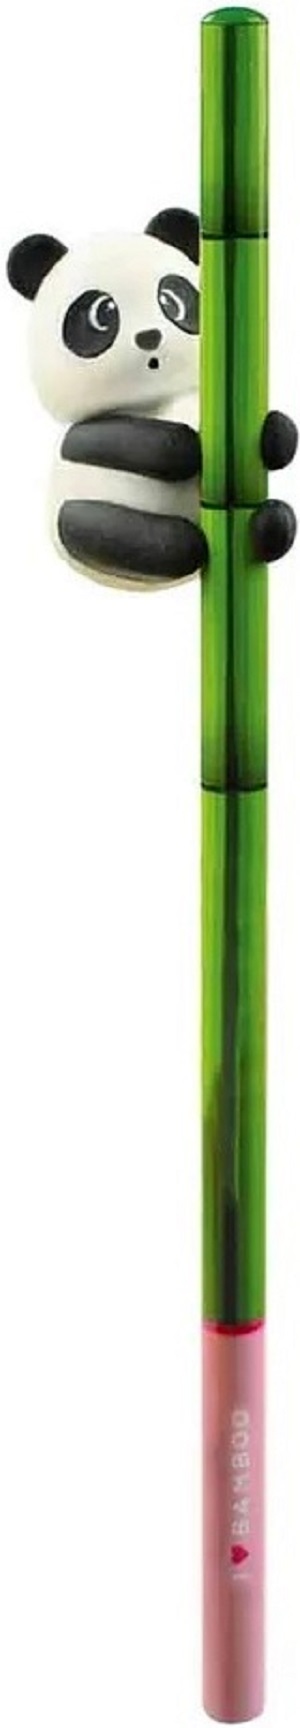 Creion cu radiera: Panda. I Love Bamboo